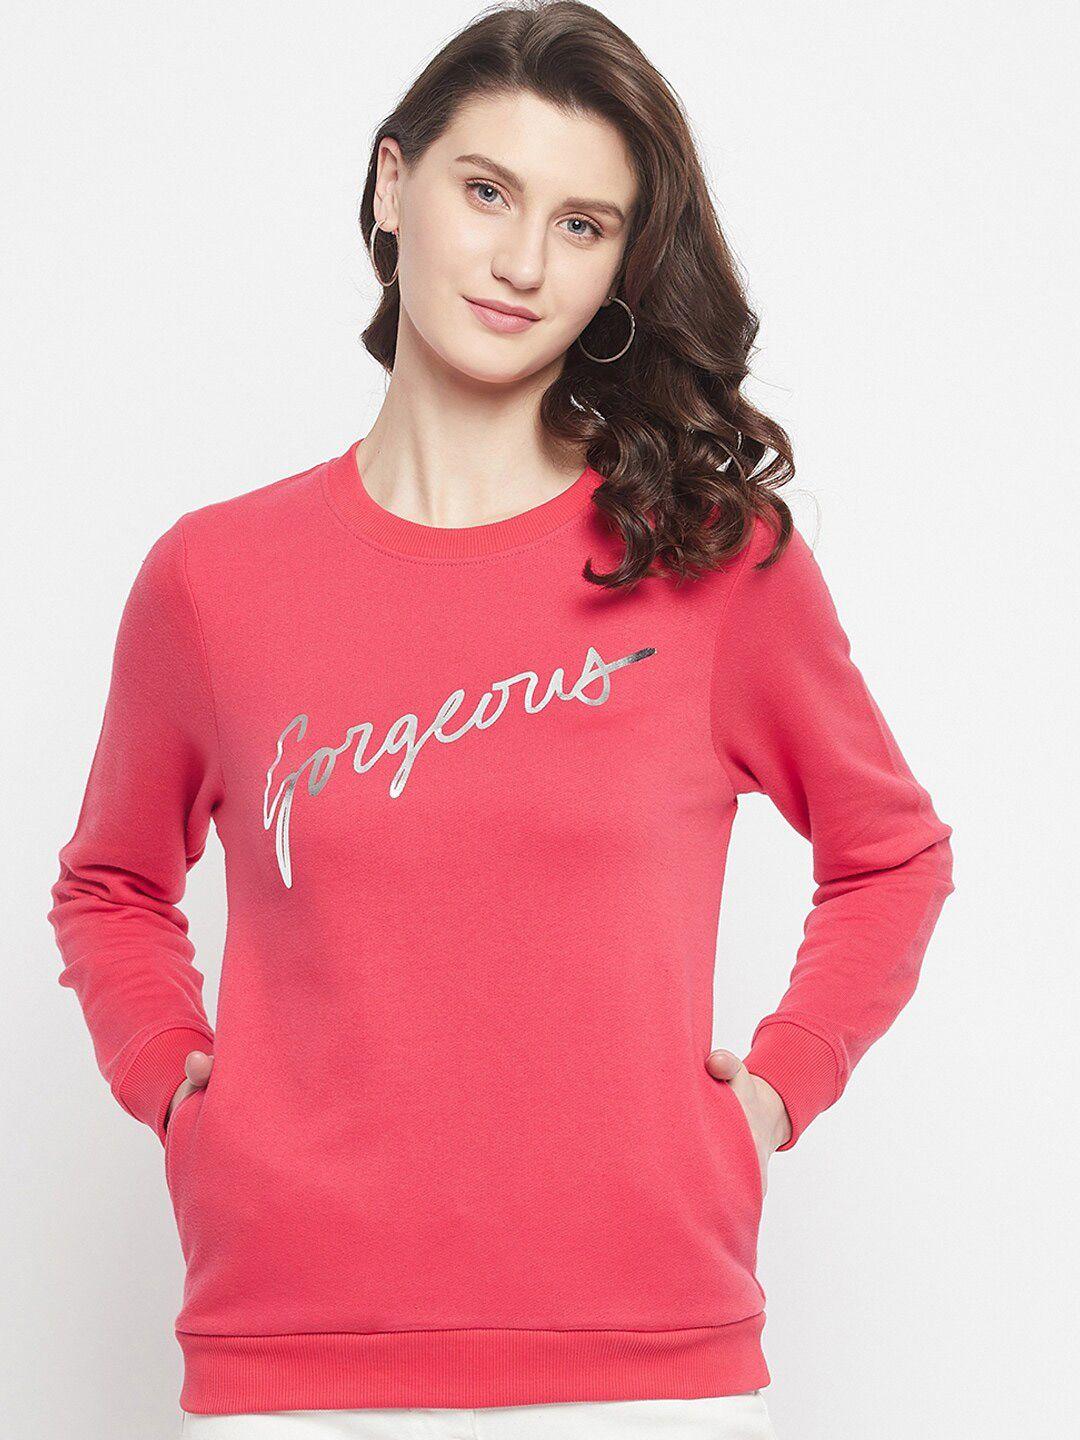 harbor-n-bay-women-coral-typography-printed-cotton-sweatshirt